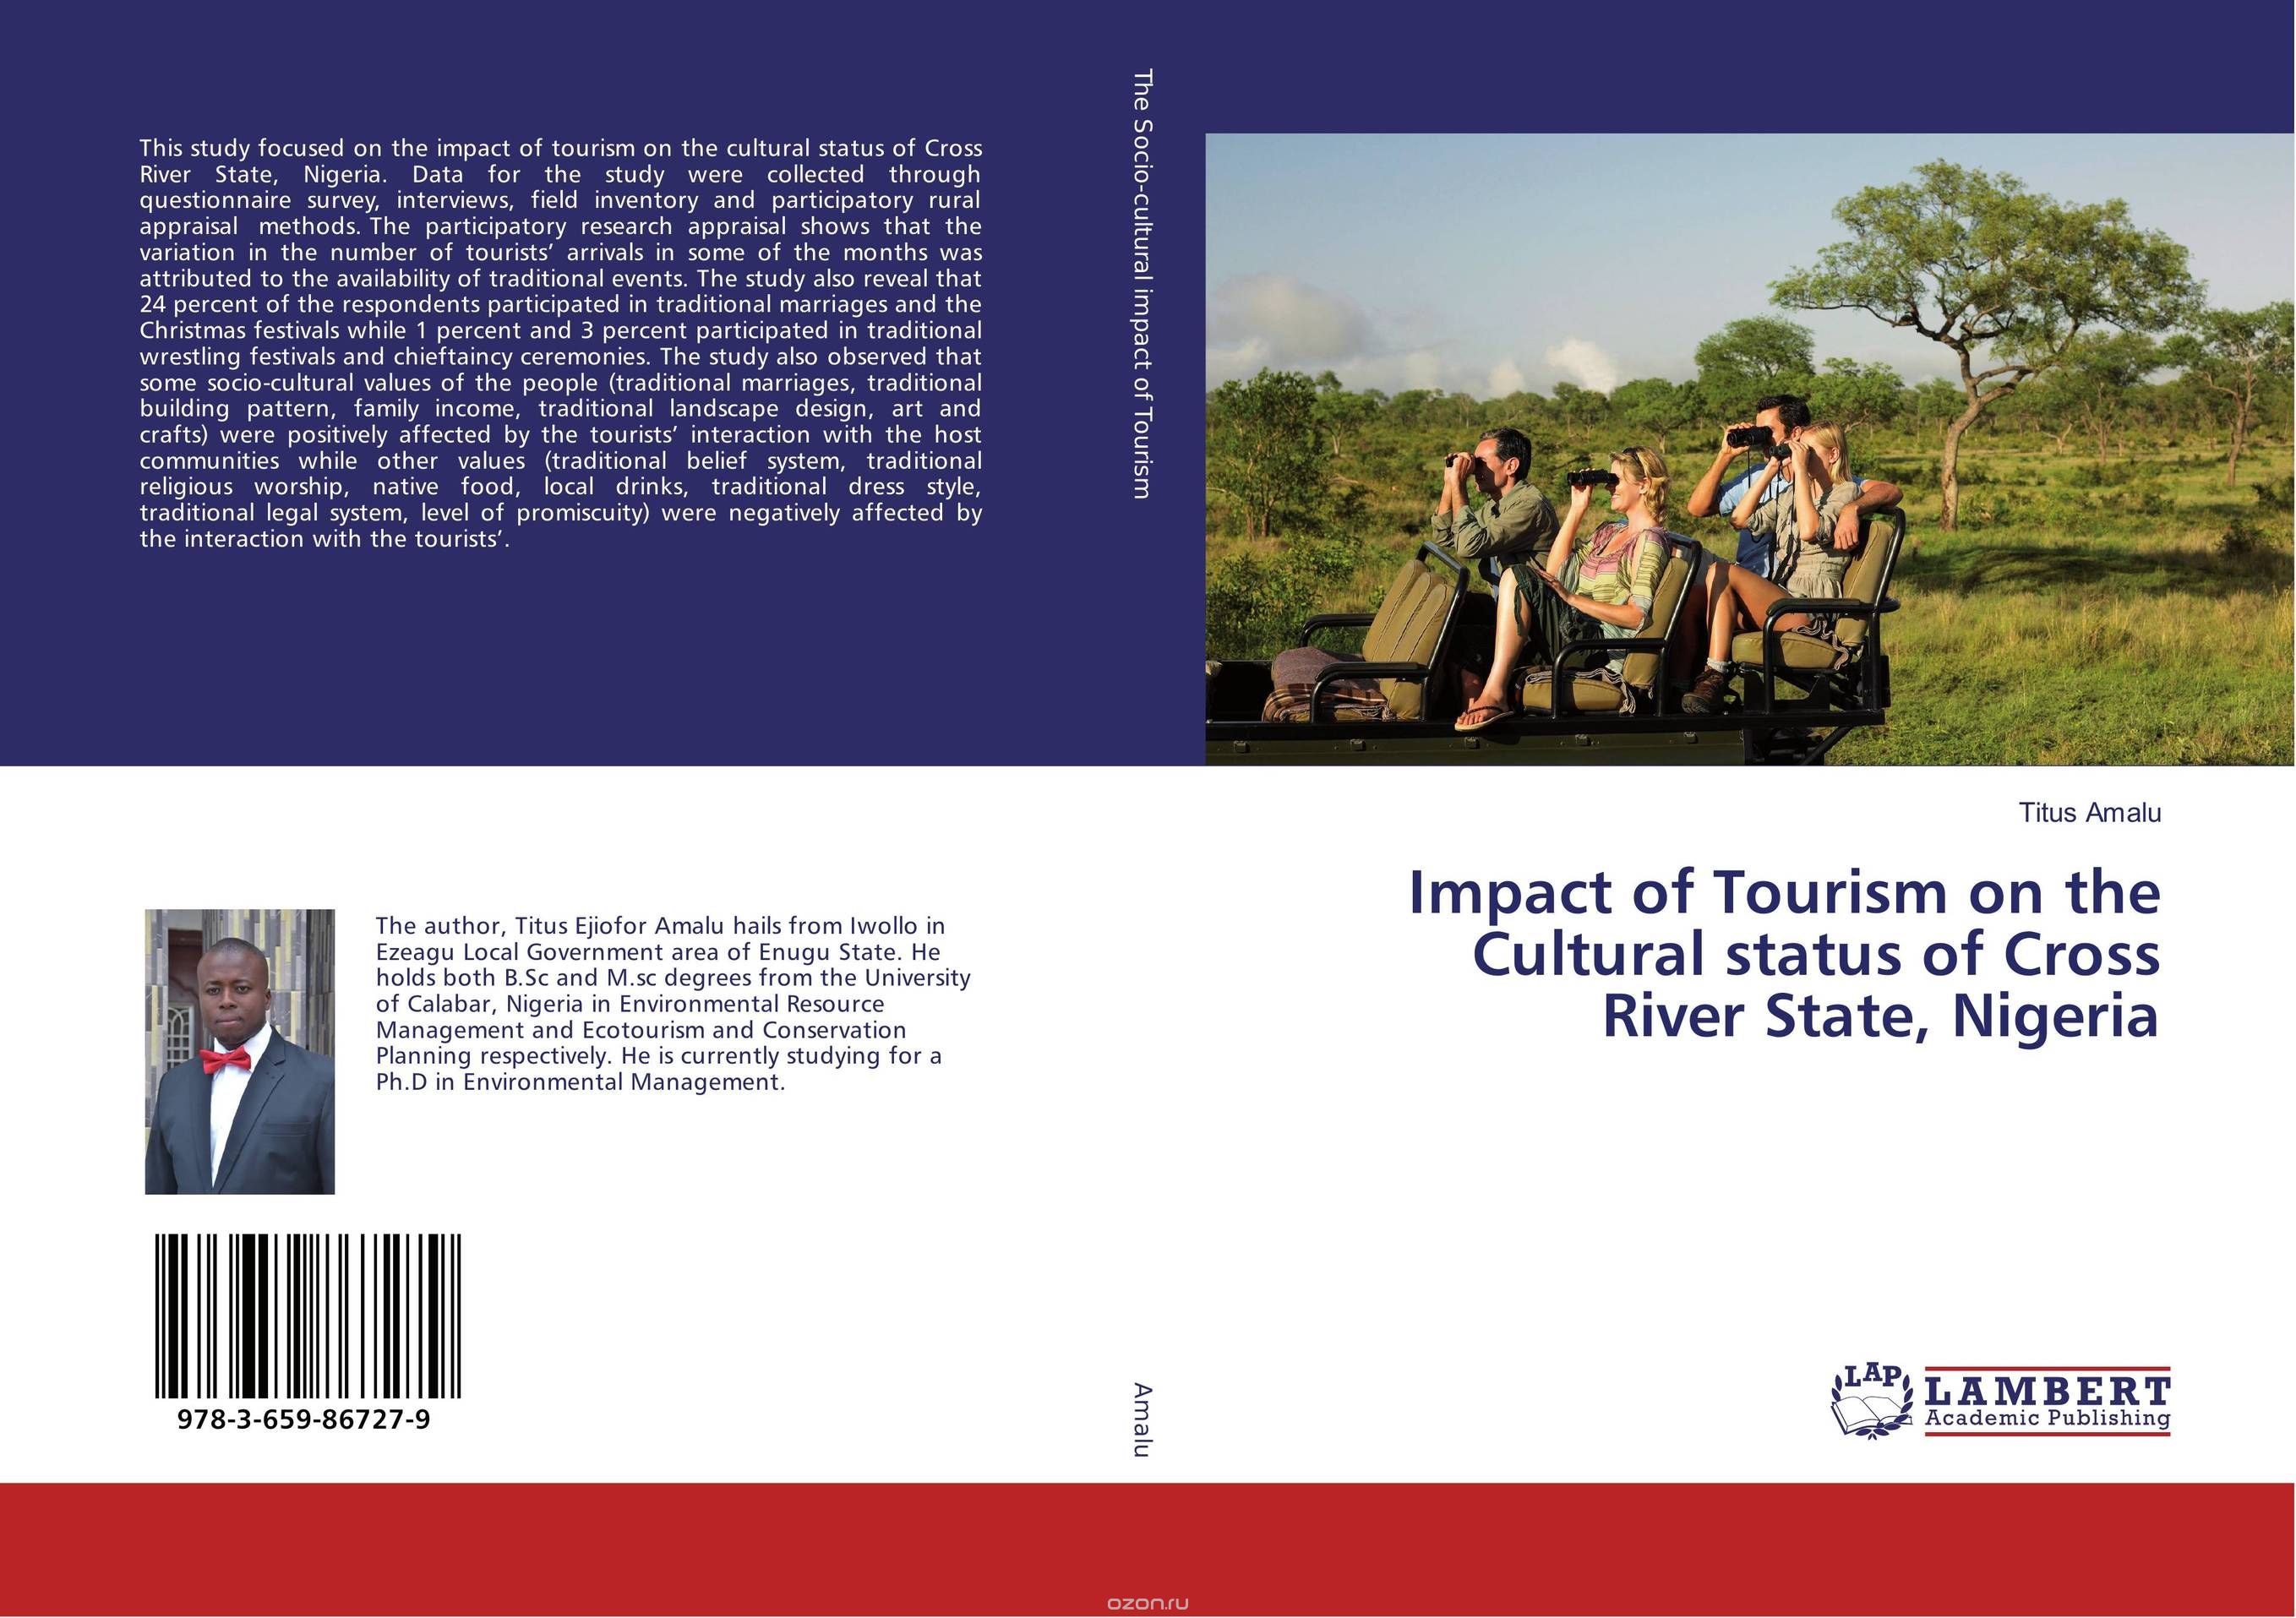 Скачать книгу "Impact of Tourism on the Cultural status of Cross River State, Nigeria"